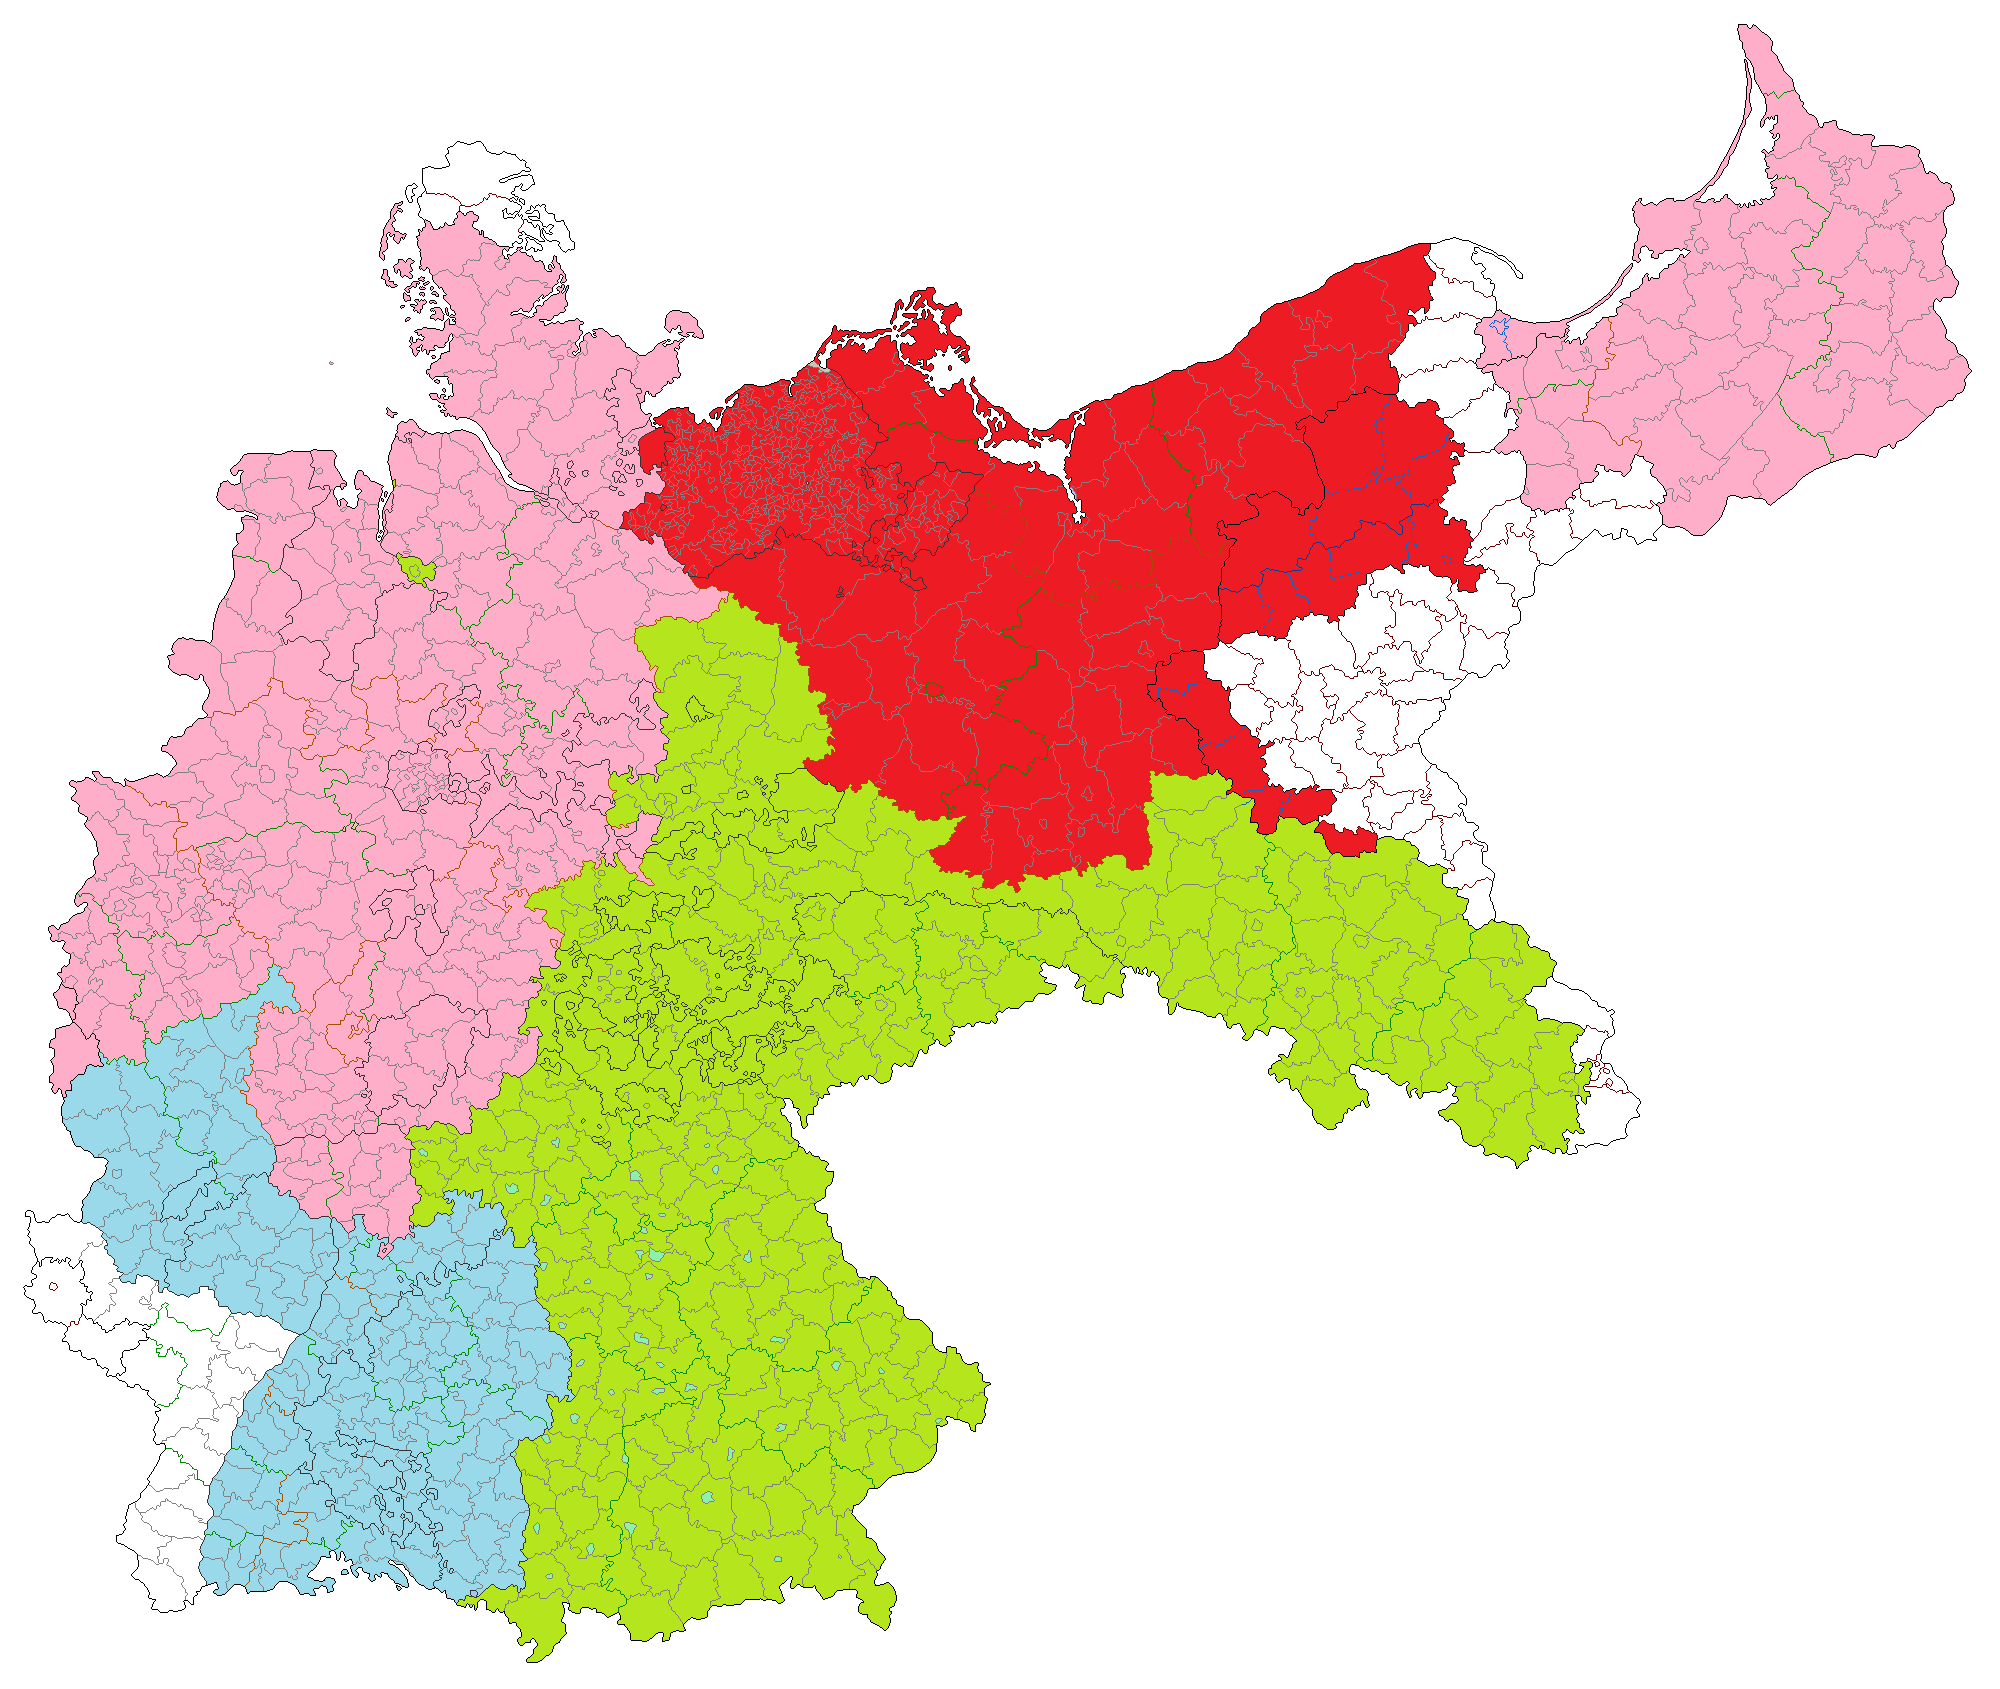 Germany Occupation Zones by JJohnson1701 on DeviantArt